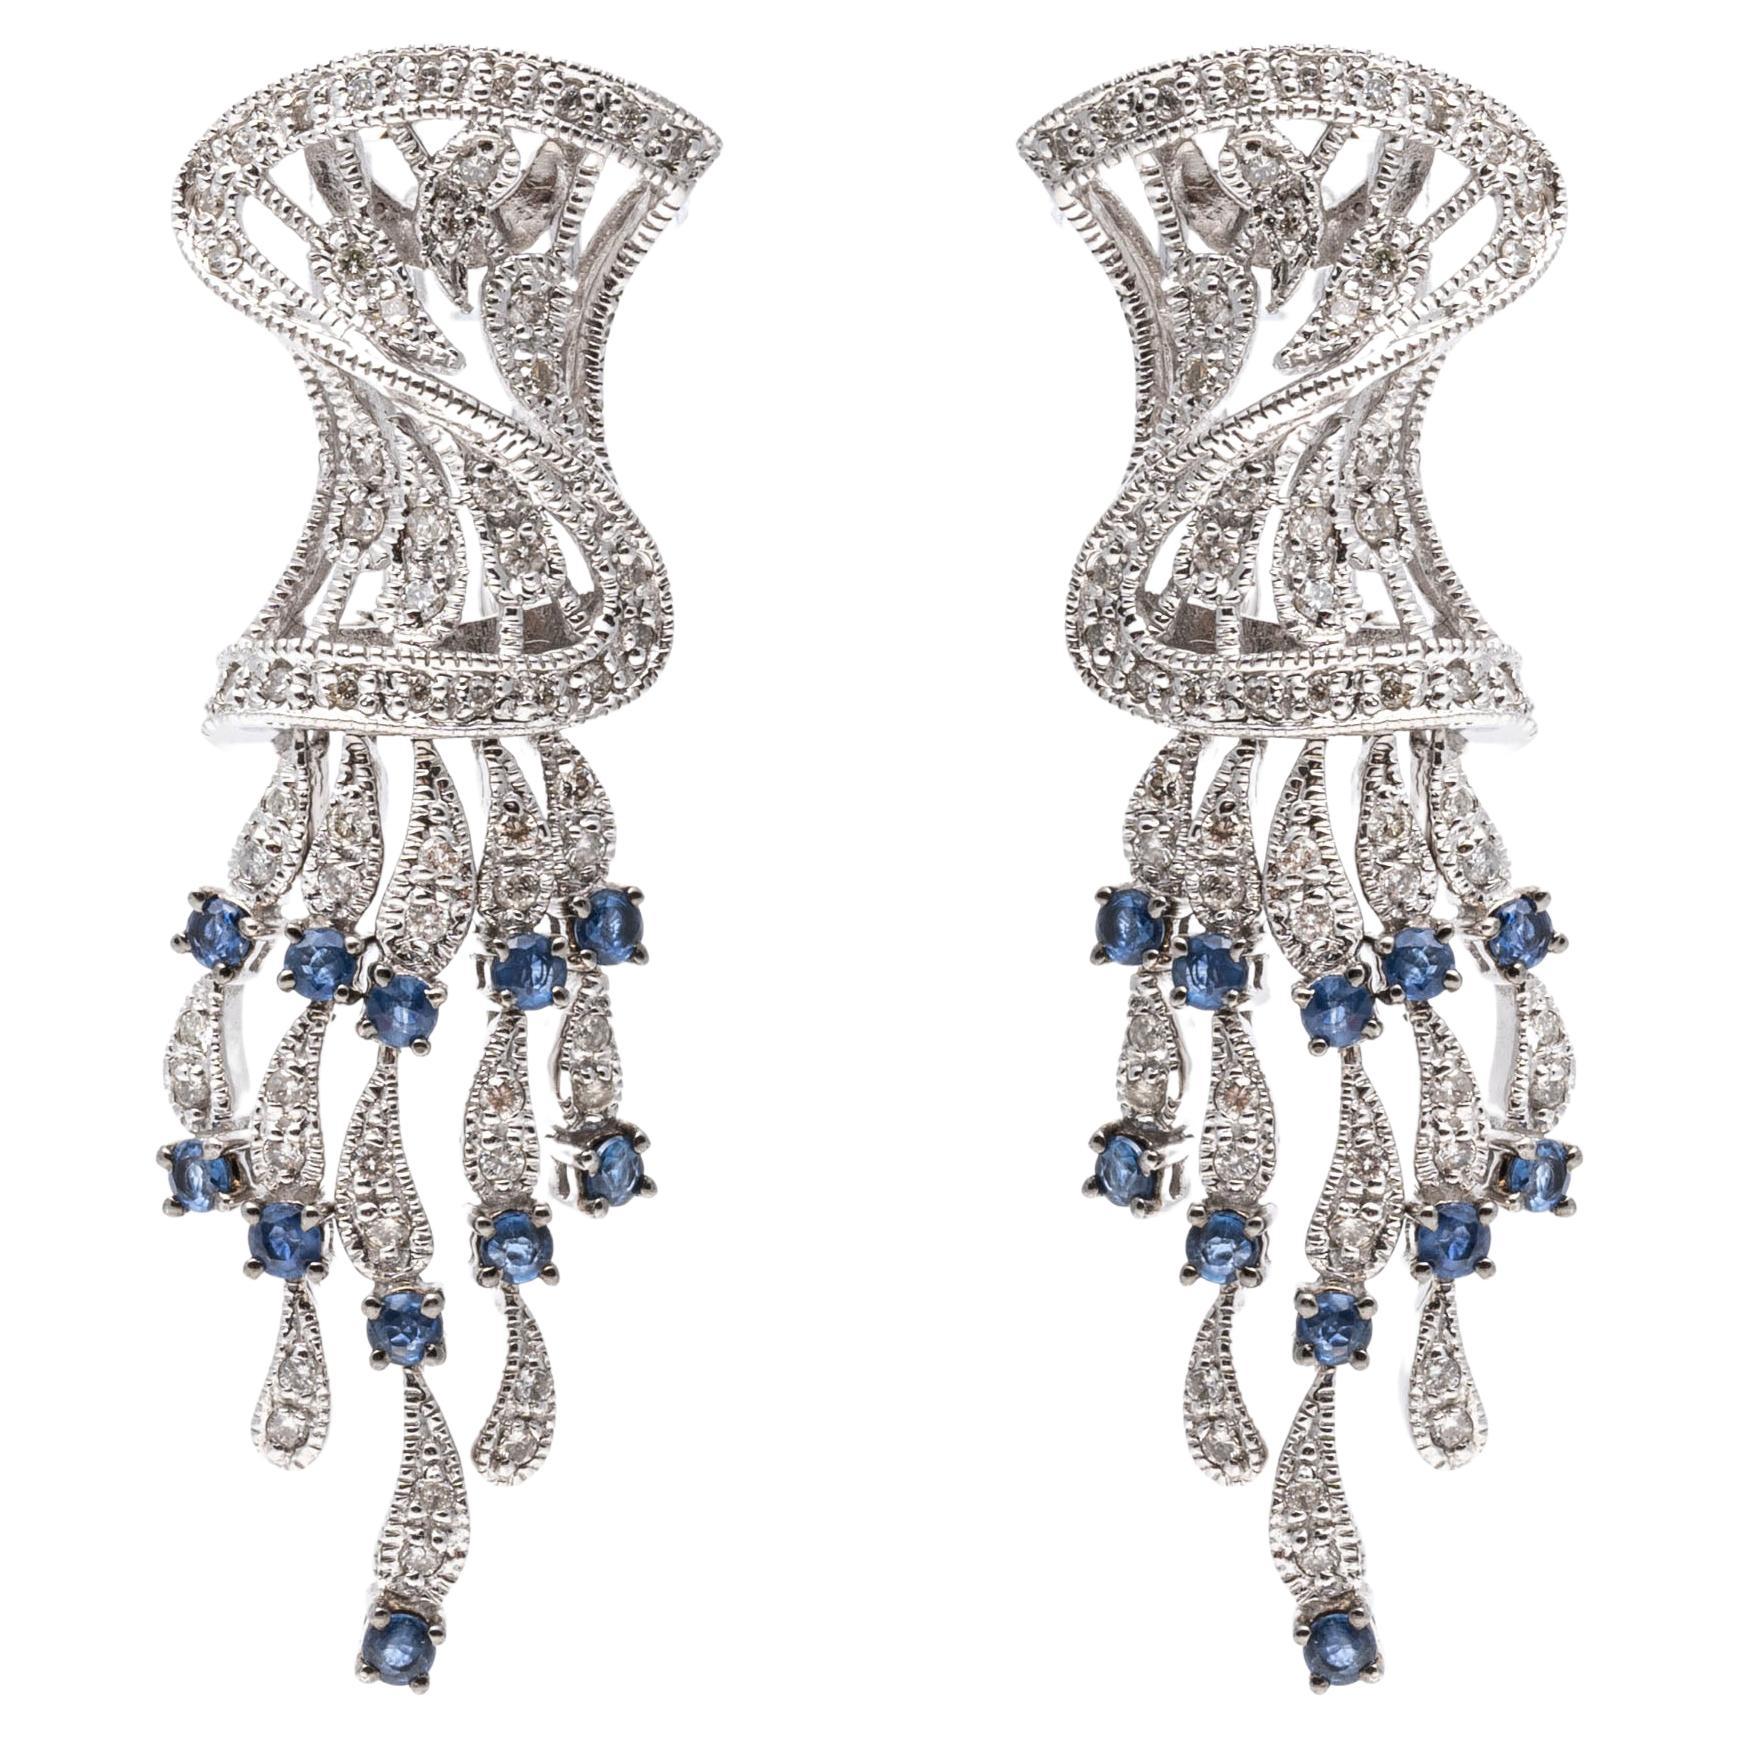 14k White Gold Spectacular Diamond and Sapphire Chandelier Earrings